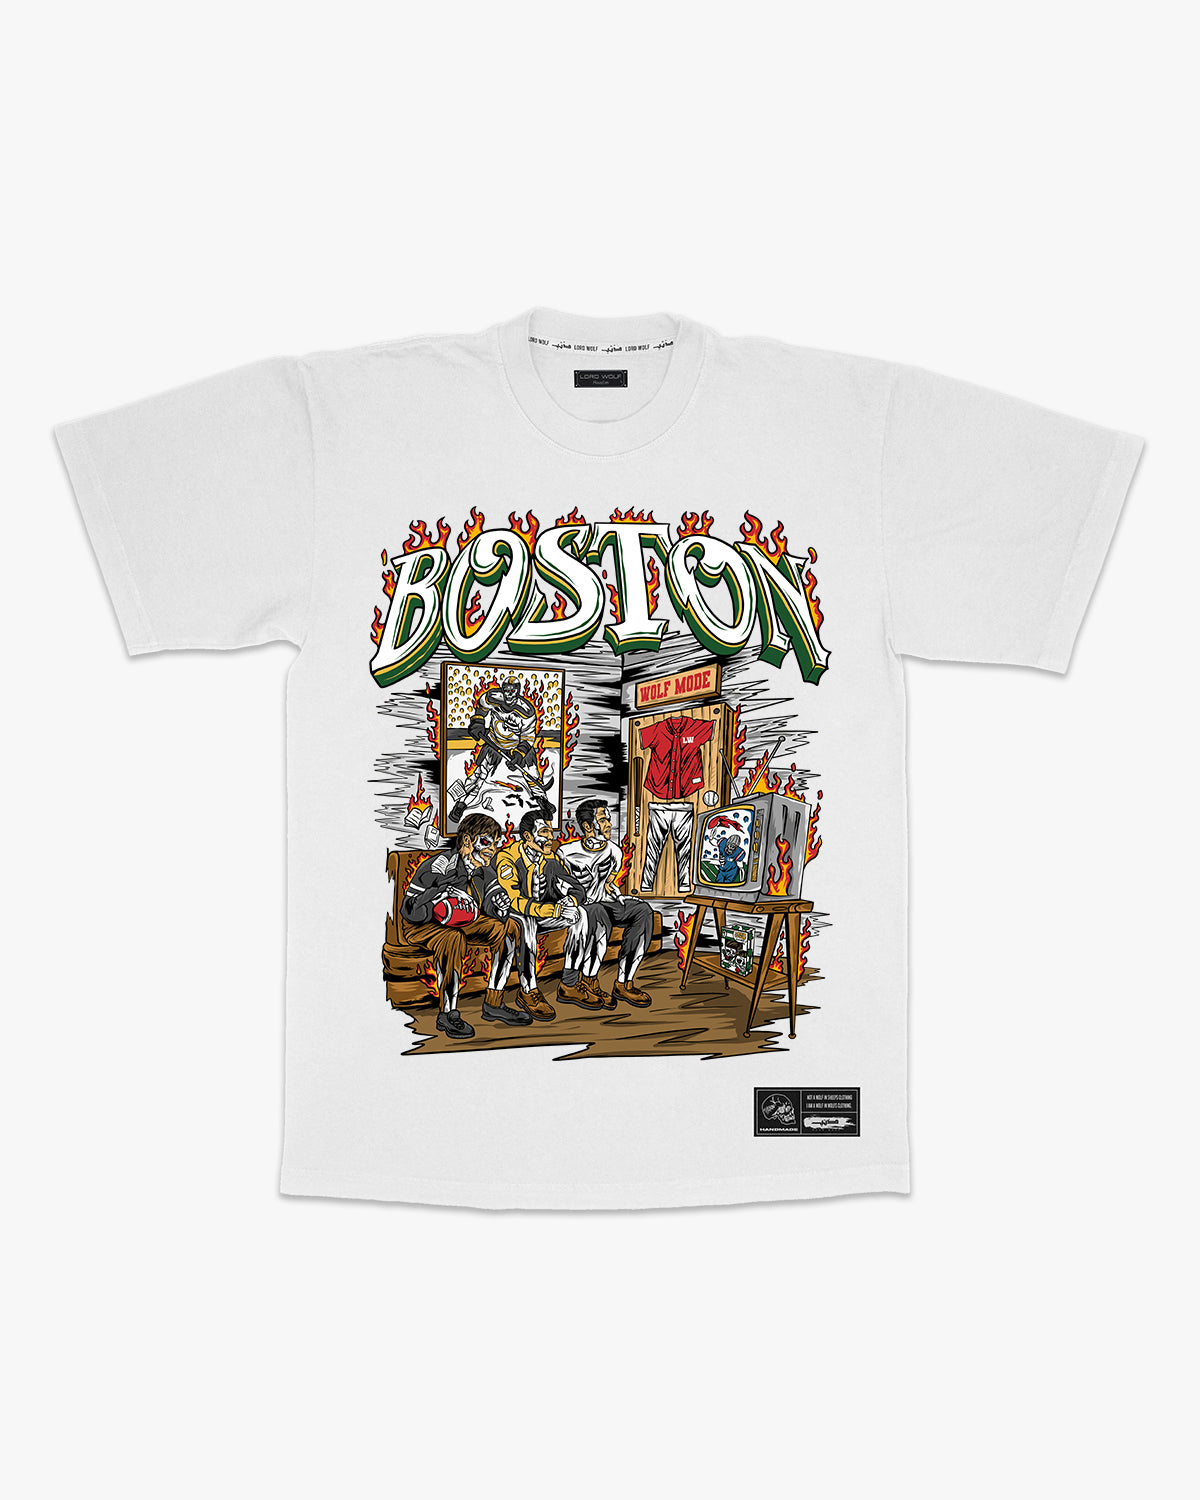 Boston Tee - Black